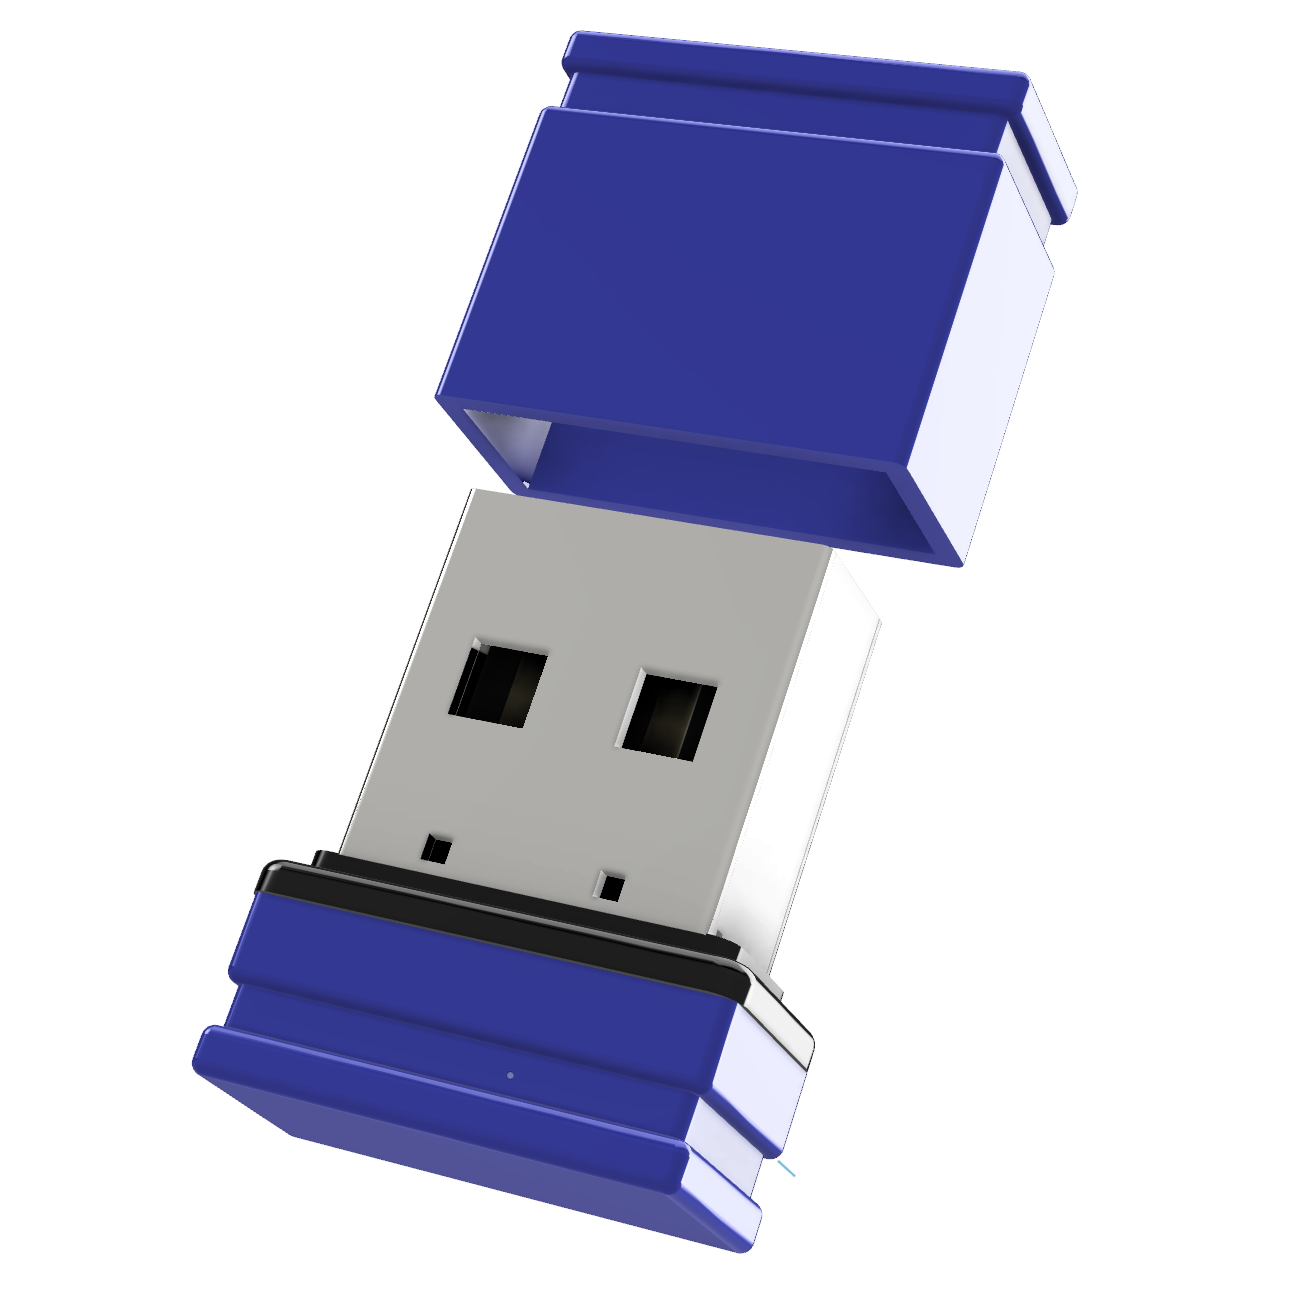 USB GERMANY ®ULTRA Mini P1 USB-Stick GB) (Blau/Schwarz, 64